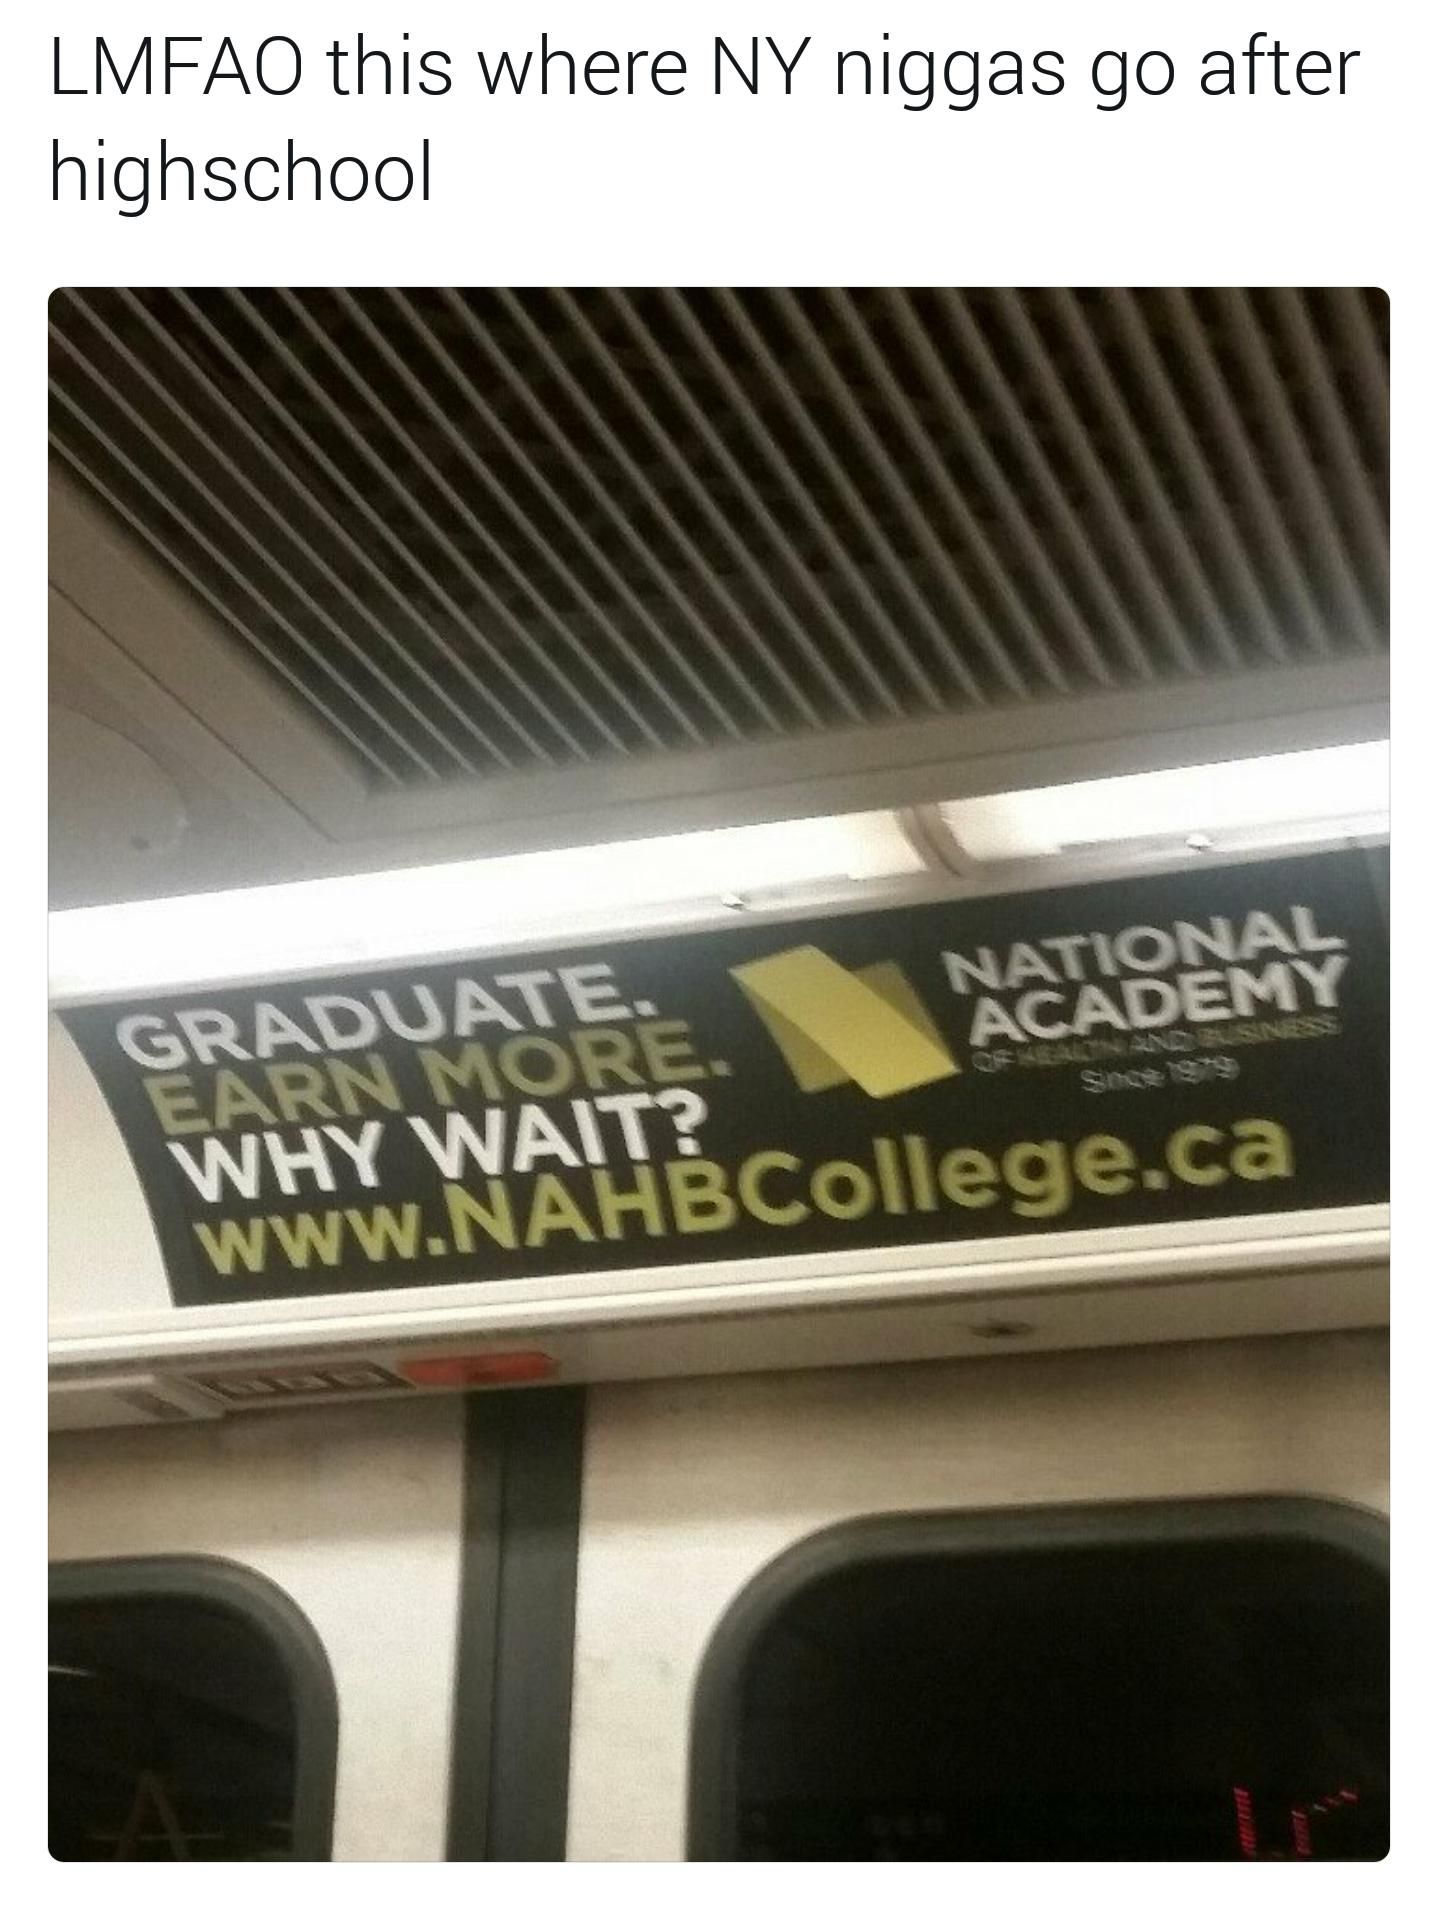 Graduate. Earn more. Why wait?